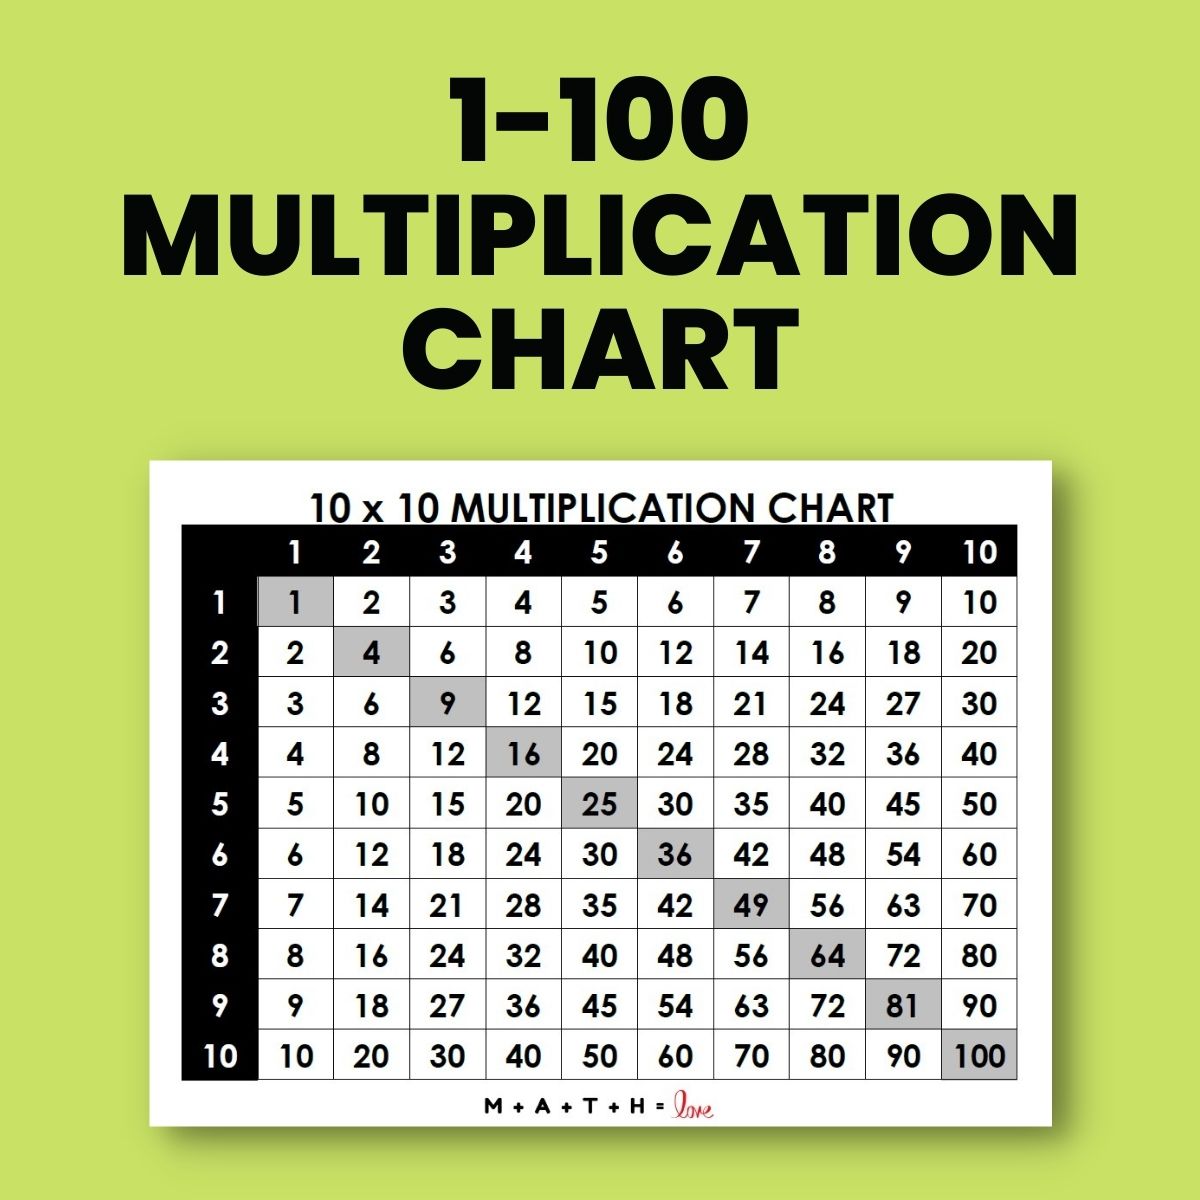 Multiplication Chart 1-100 | Math = Love